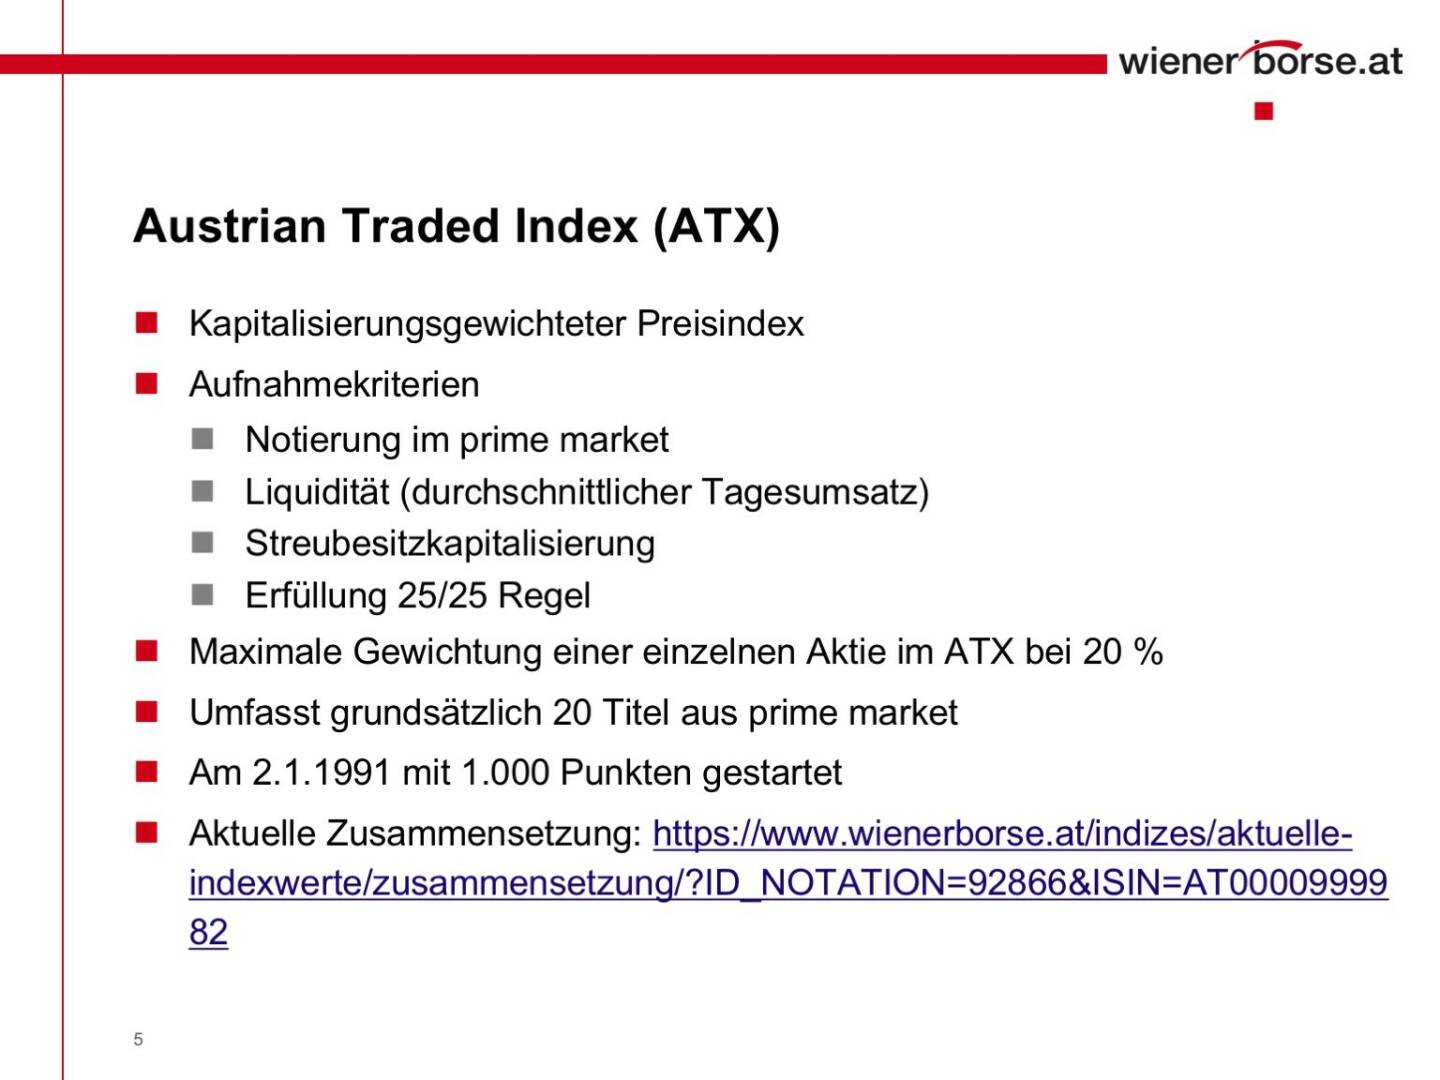 Wiener Börse - Austrian Traded Index ATX